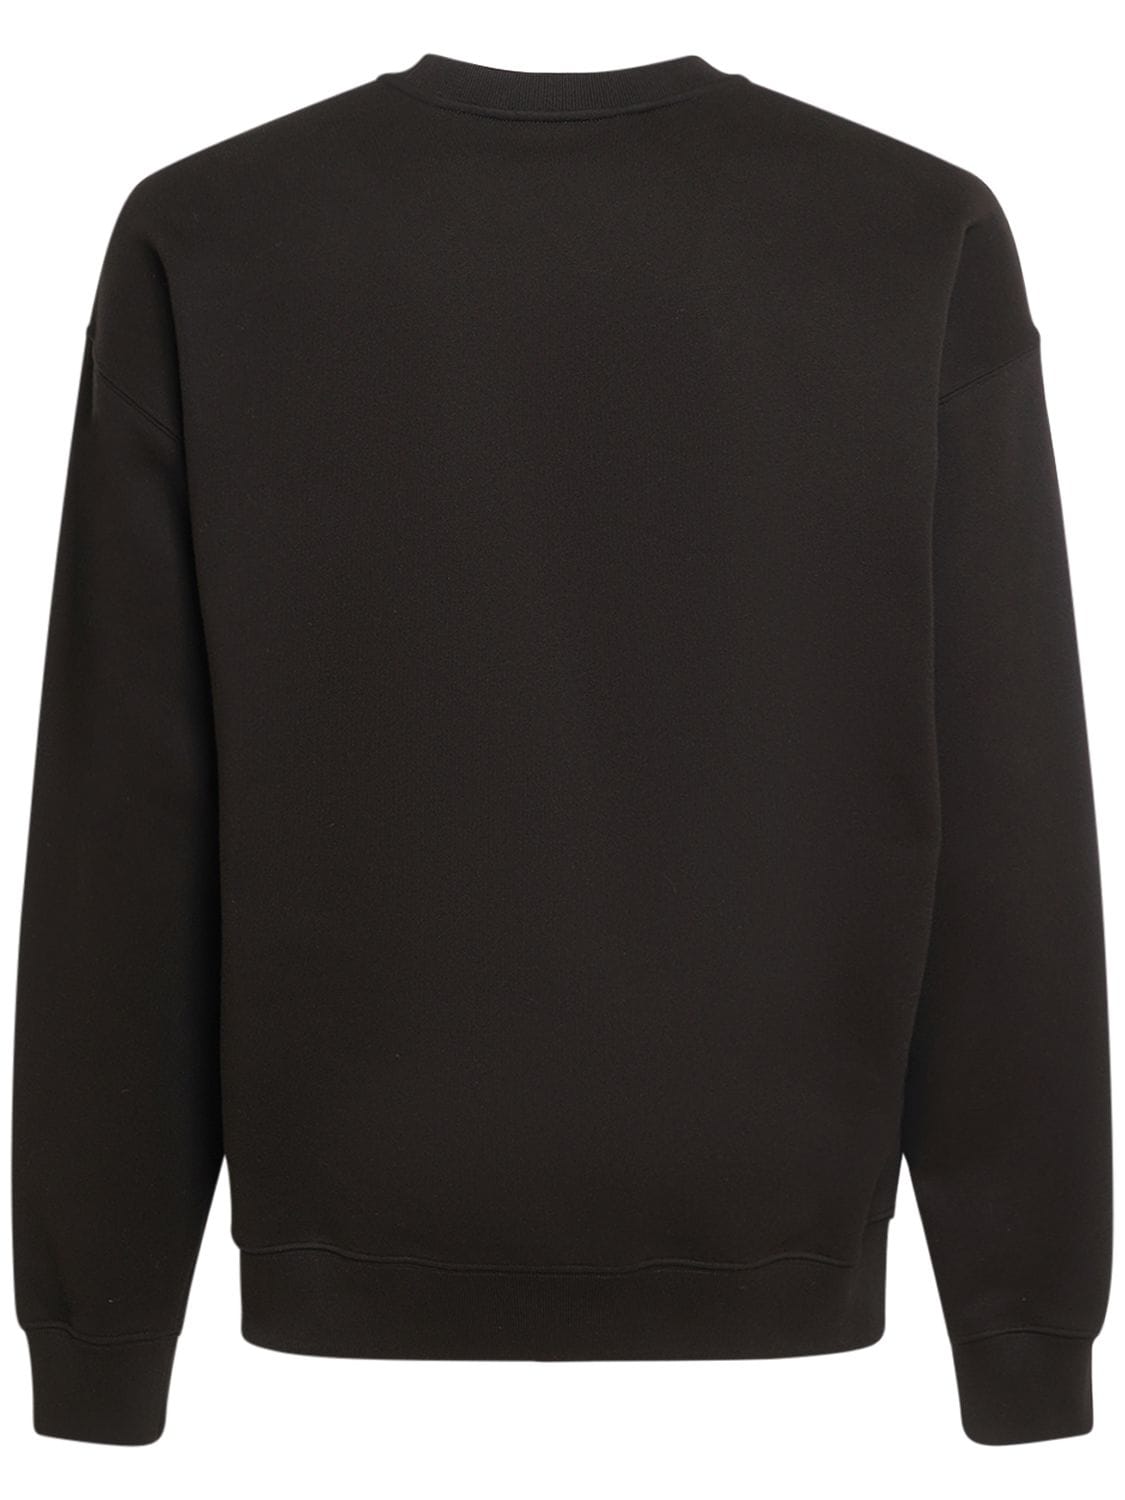 Shop Versace Lights Printed Cotton Sweatshirt In Black